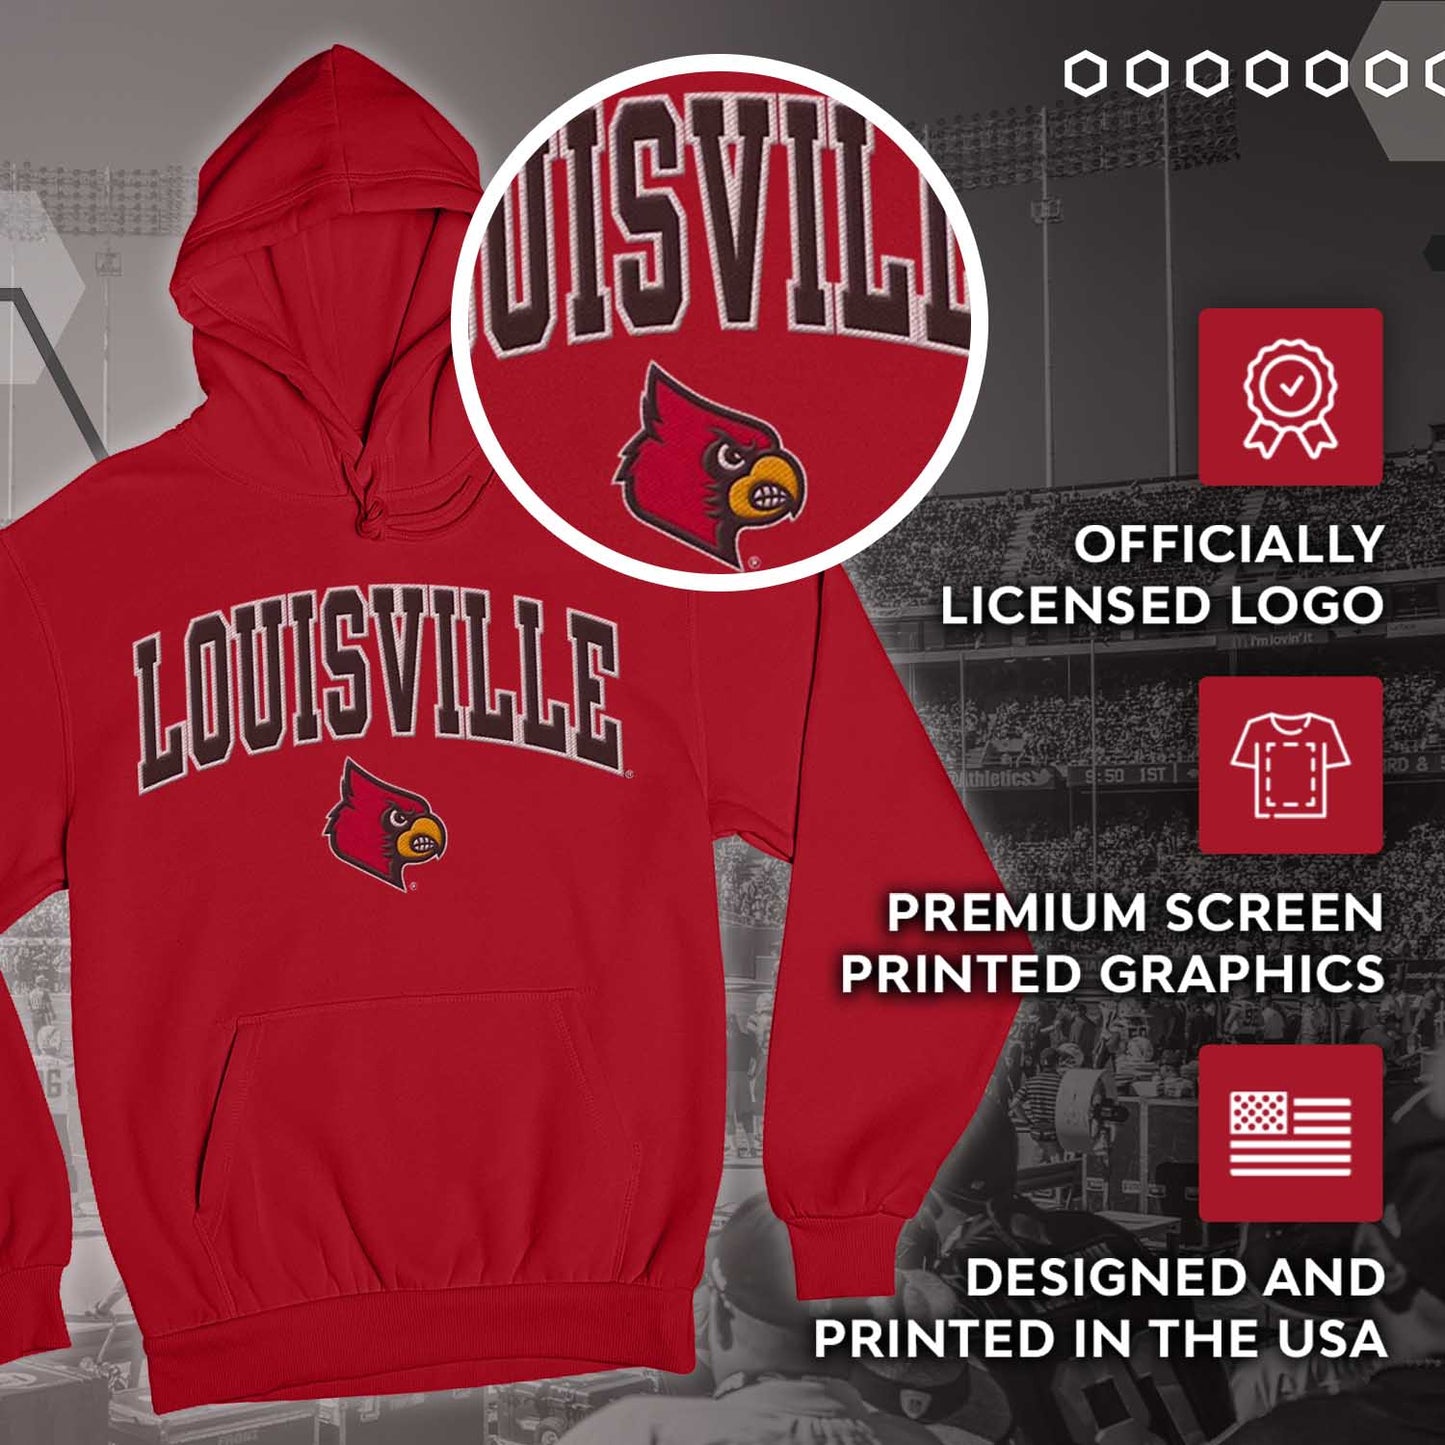 Louisville Cardinals NCAA Adult Tackle Twill Hooded Sweatshirt - Red